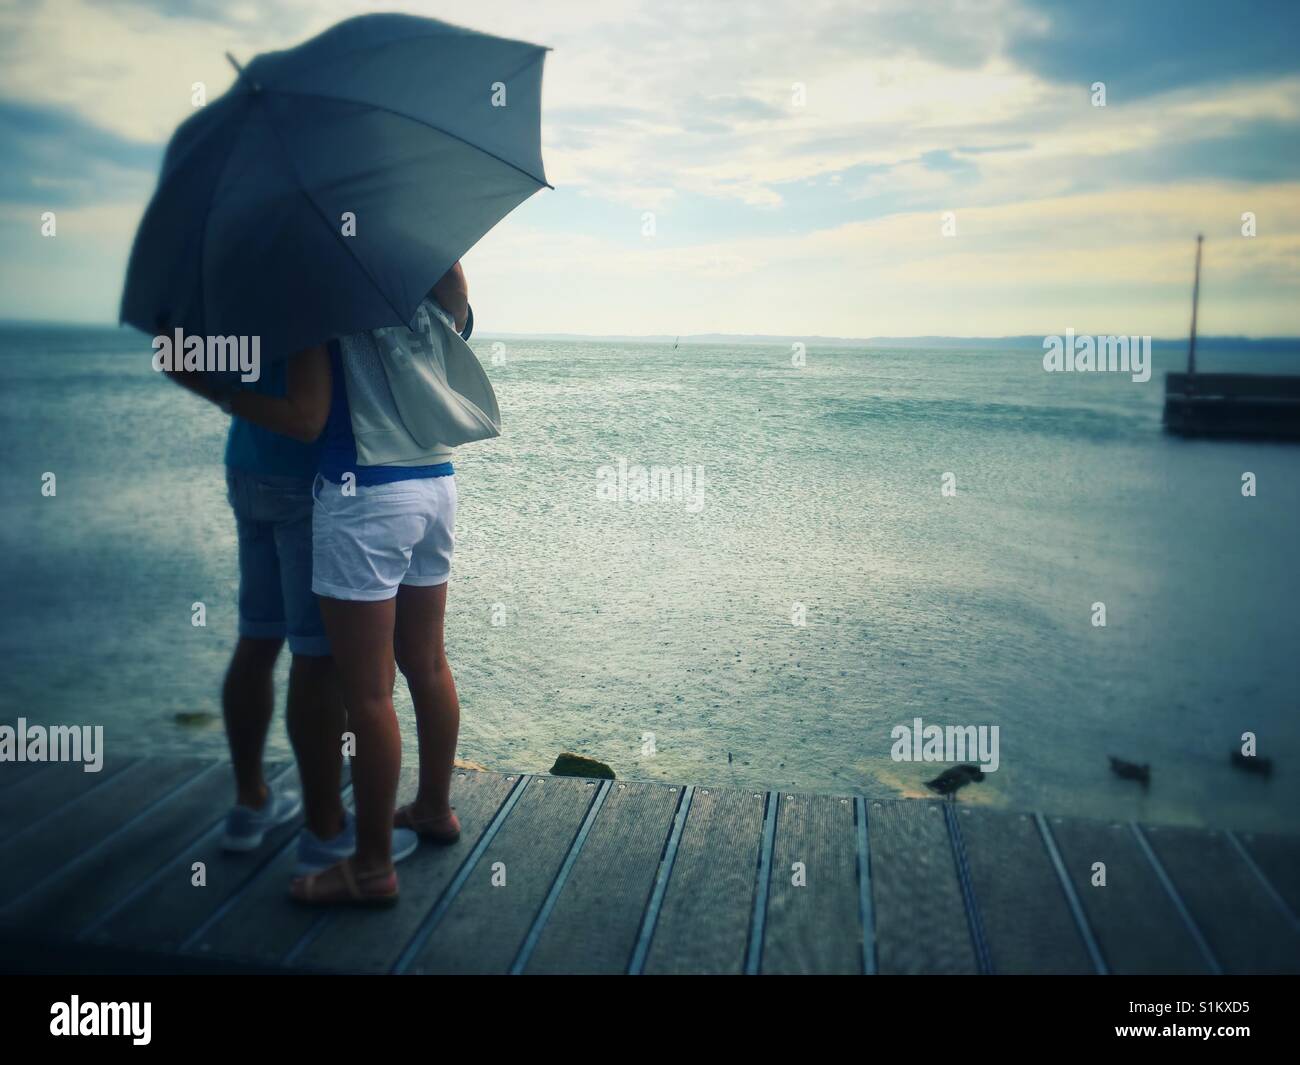 Couple at seaside with umbrella Stock Photo